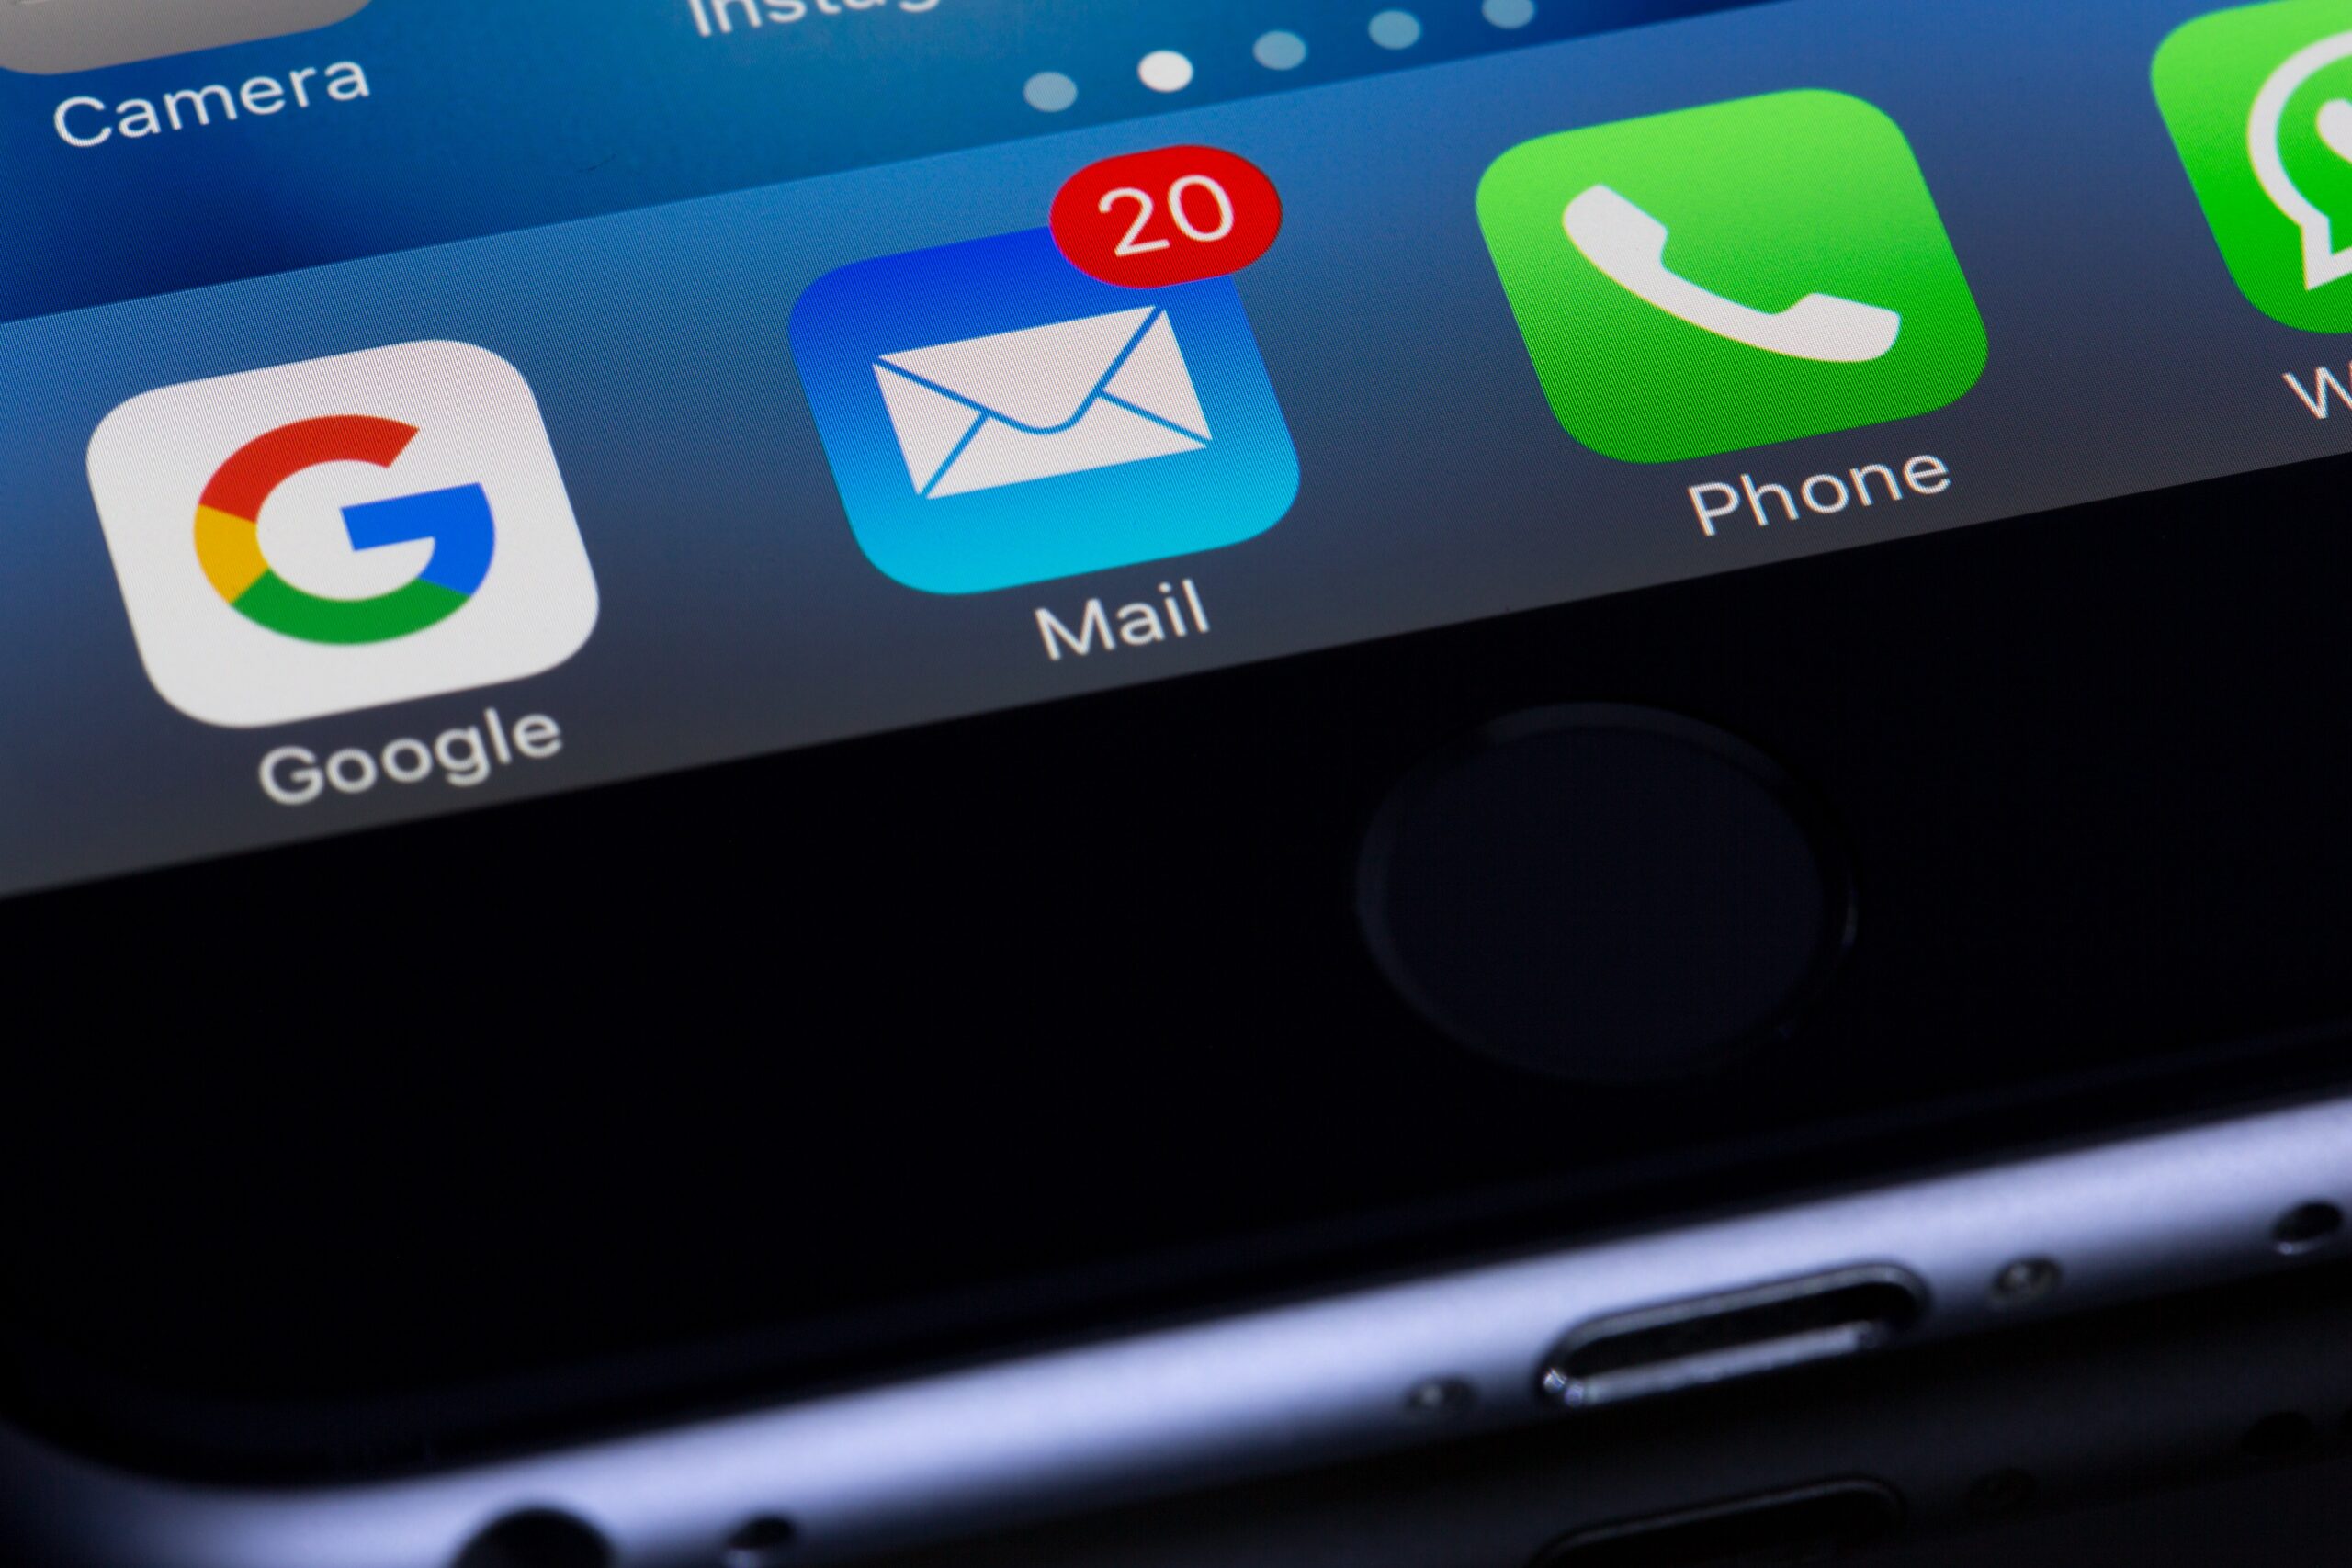 iOS Mail app notifications